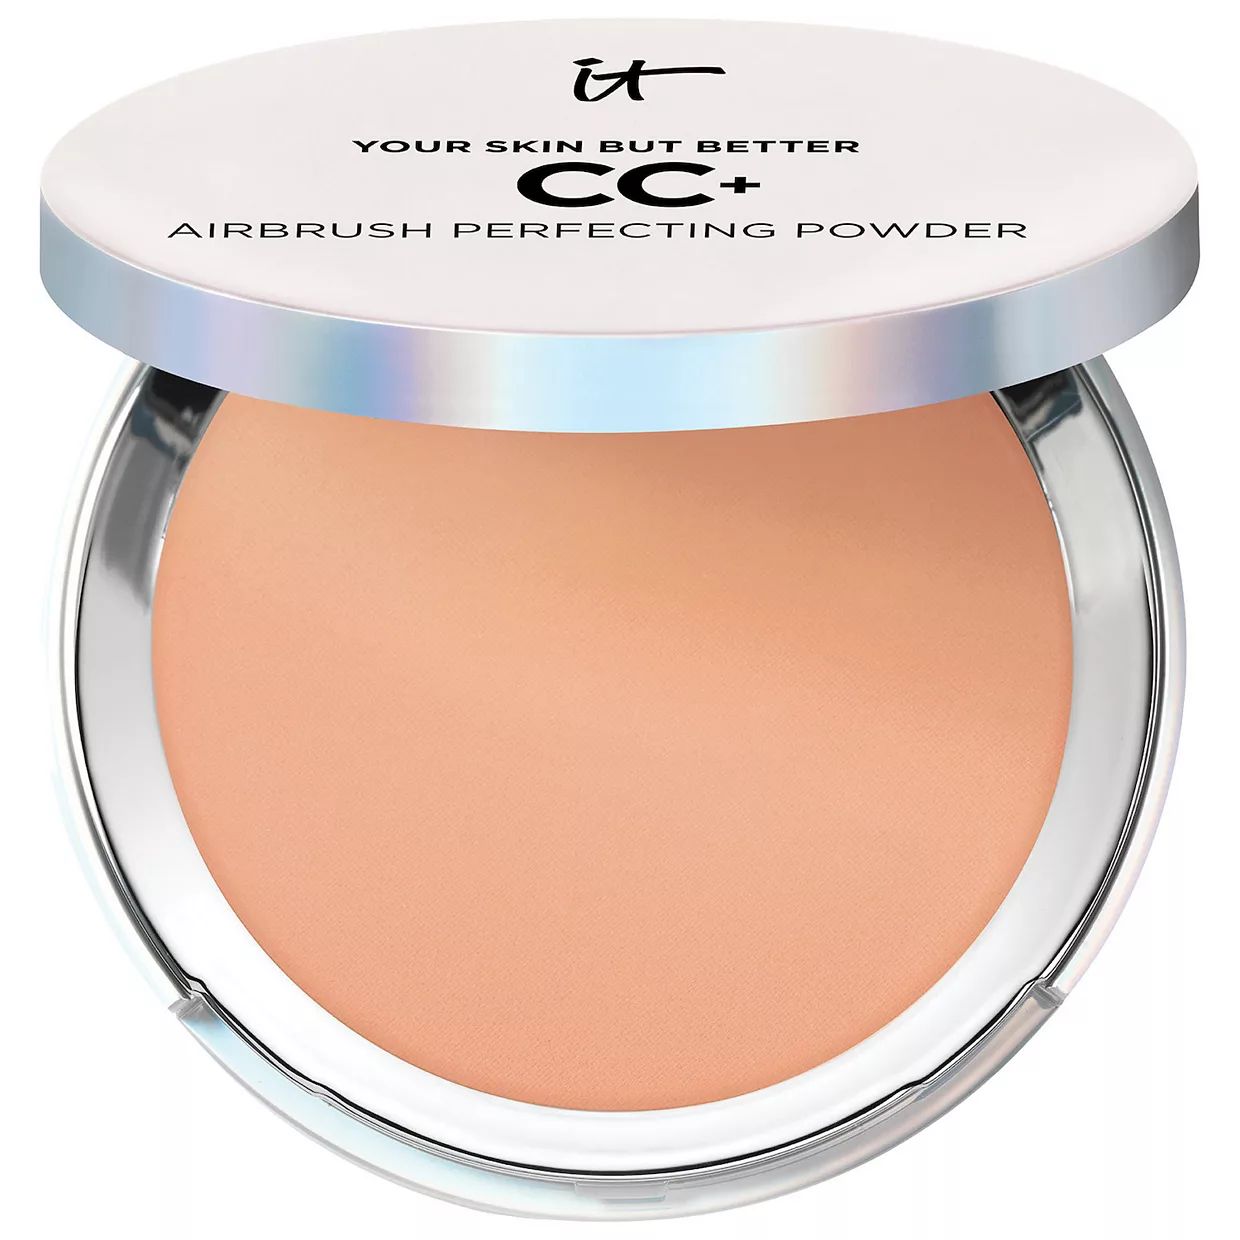 IT Cosmetics CC+ Airbrush Perfecting Powder Foundation | Kohl's